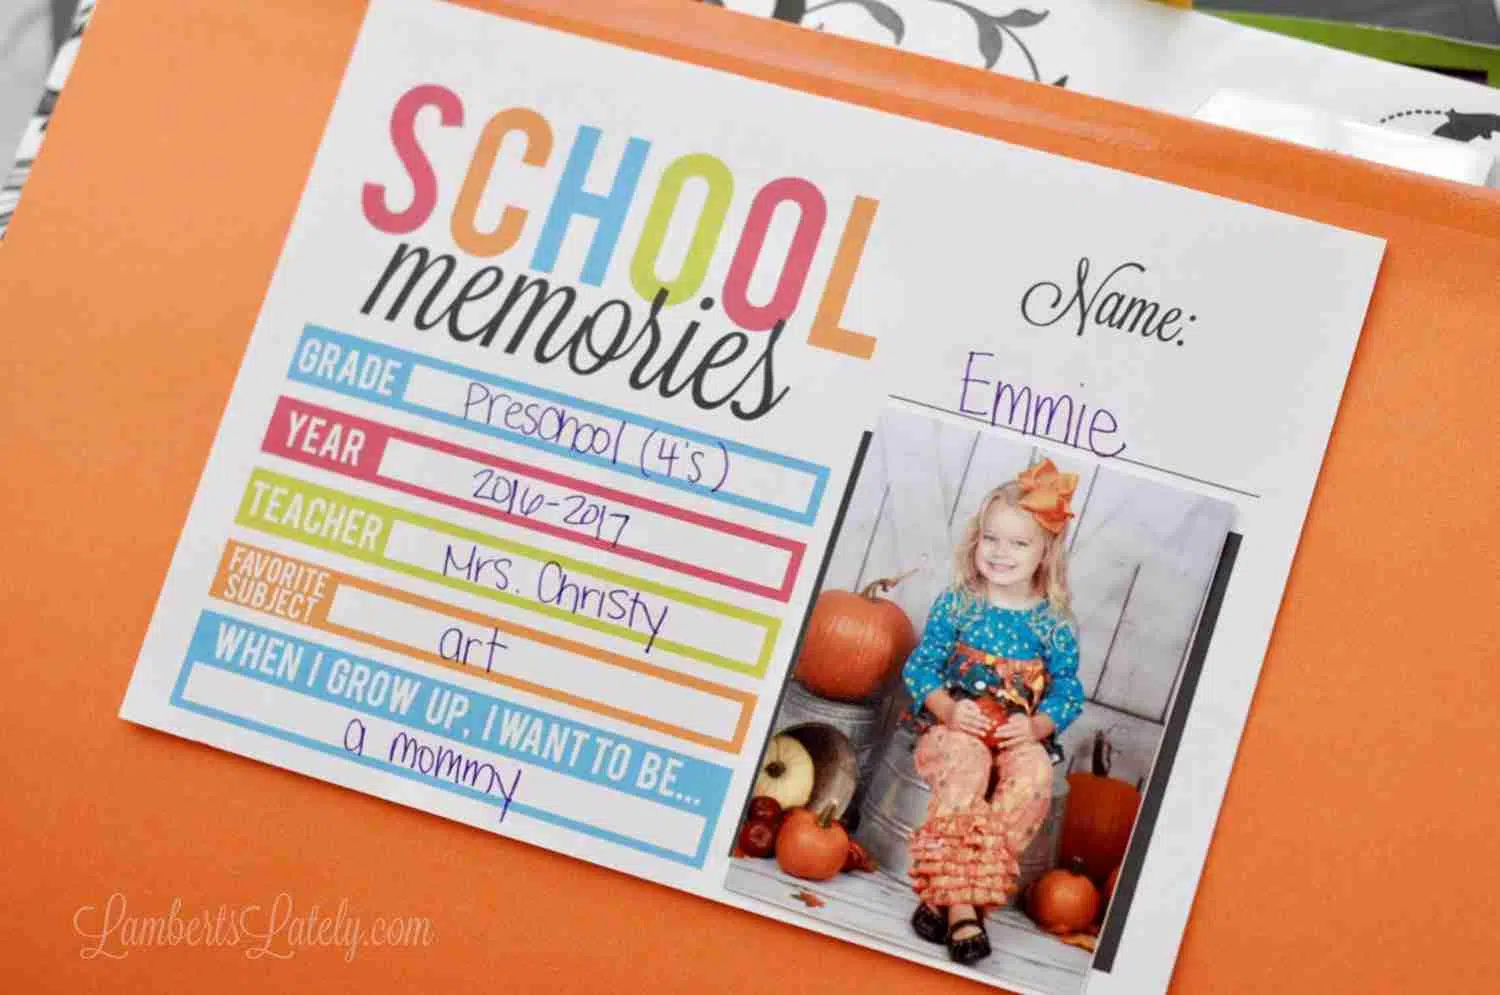 school memories printable on an orange folder.